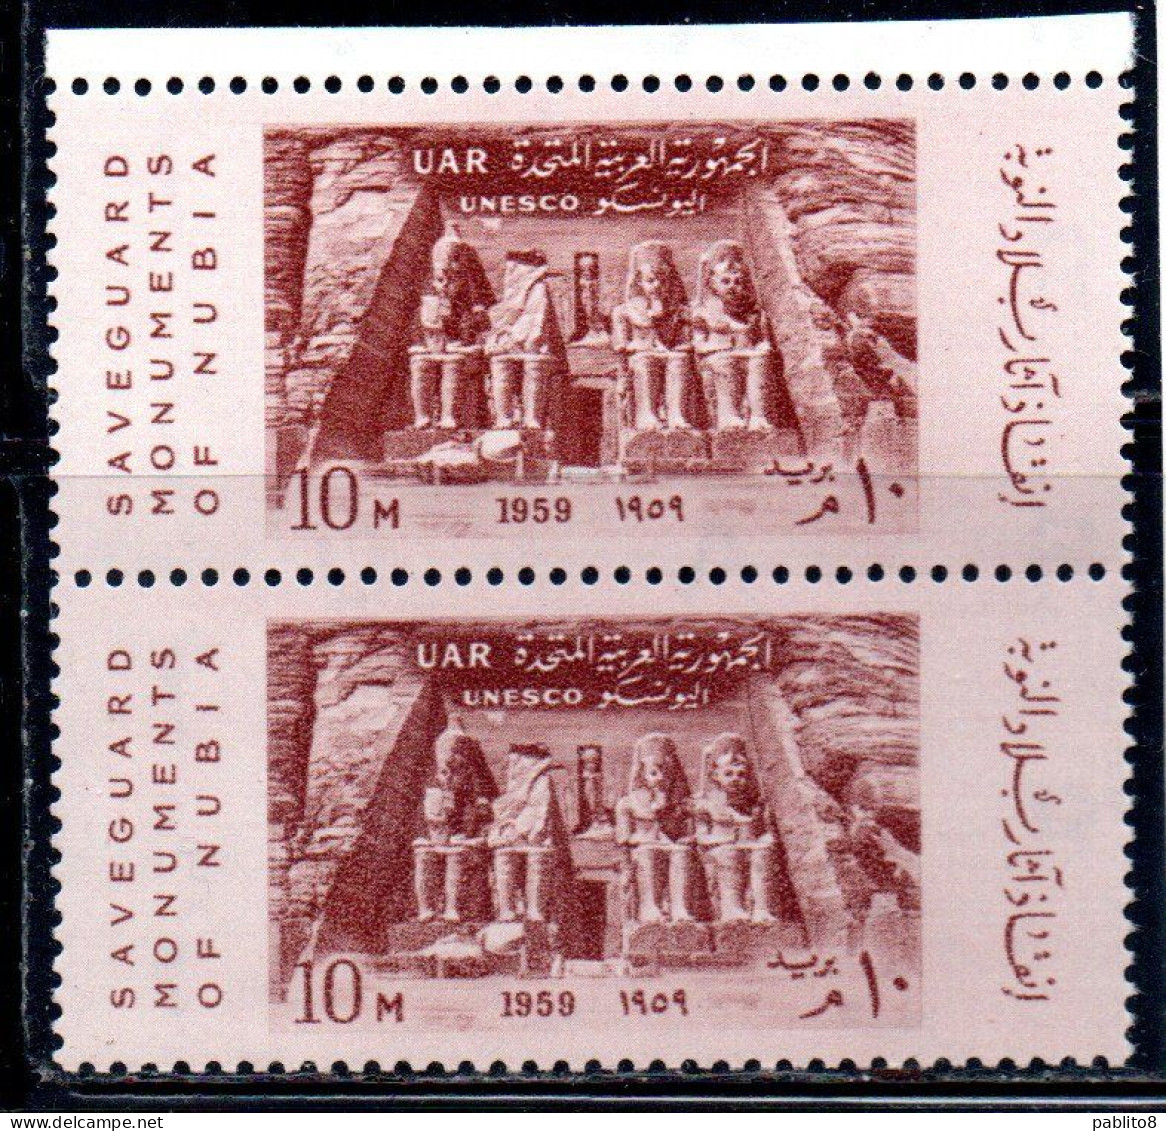 UAR EGYPT EGITTO 1959 SAVE HISTORIC MONUMENTS IN NUBIA ABU SIMBEL TEMPLE OF RAMSES II 10m MNH - Unused Stamps